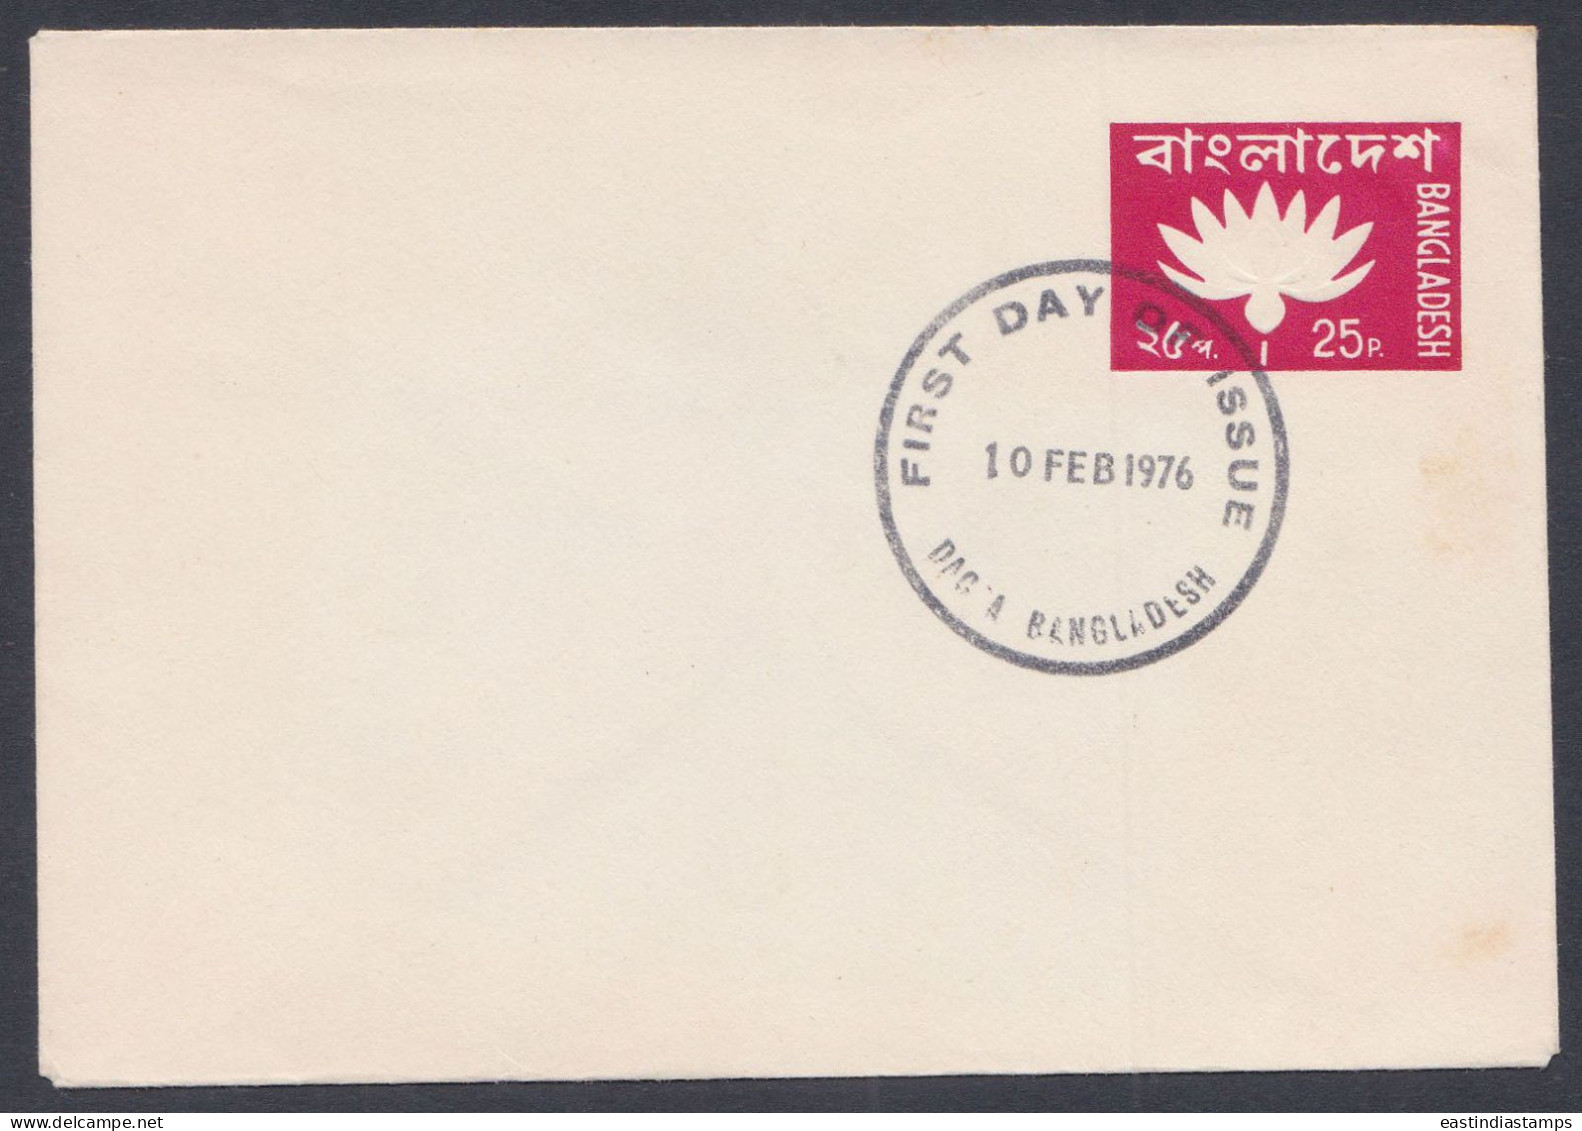 Bangladesh 1976 25 Paisa First Day Issue Postal Envelope, Cover, Postal Stationery - Bangladesh